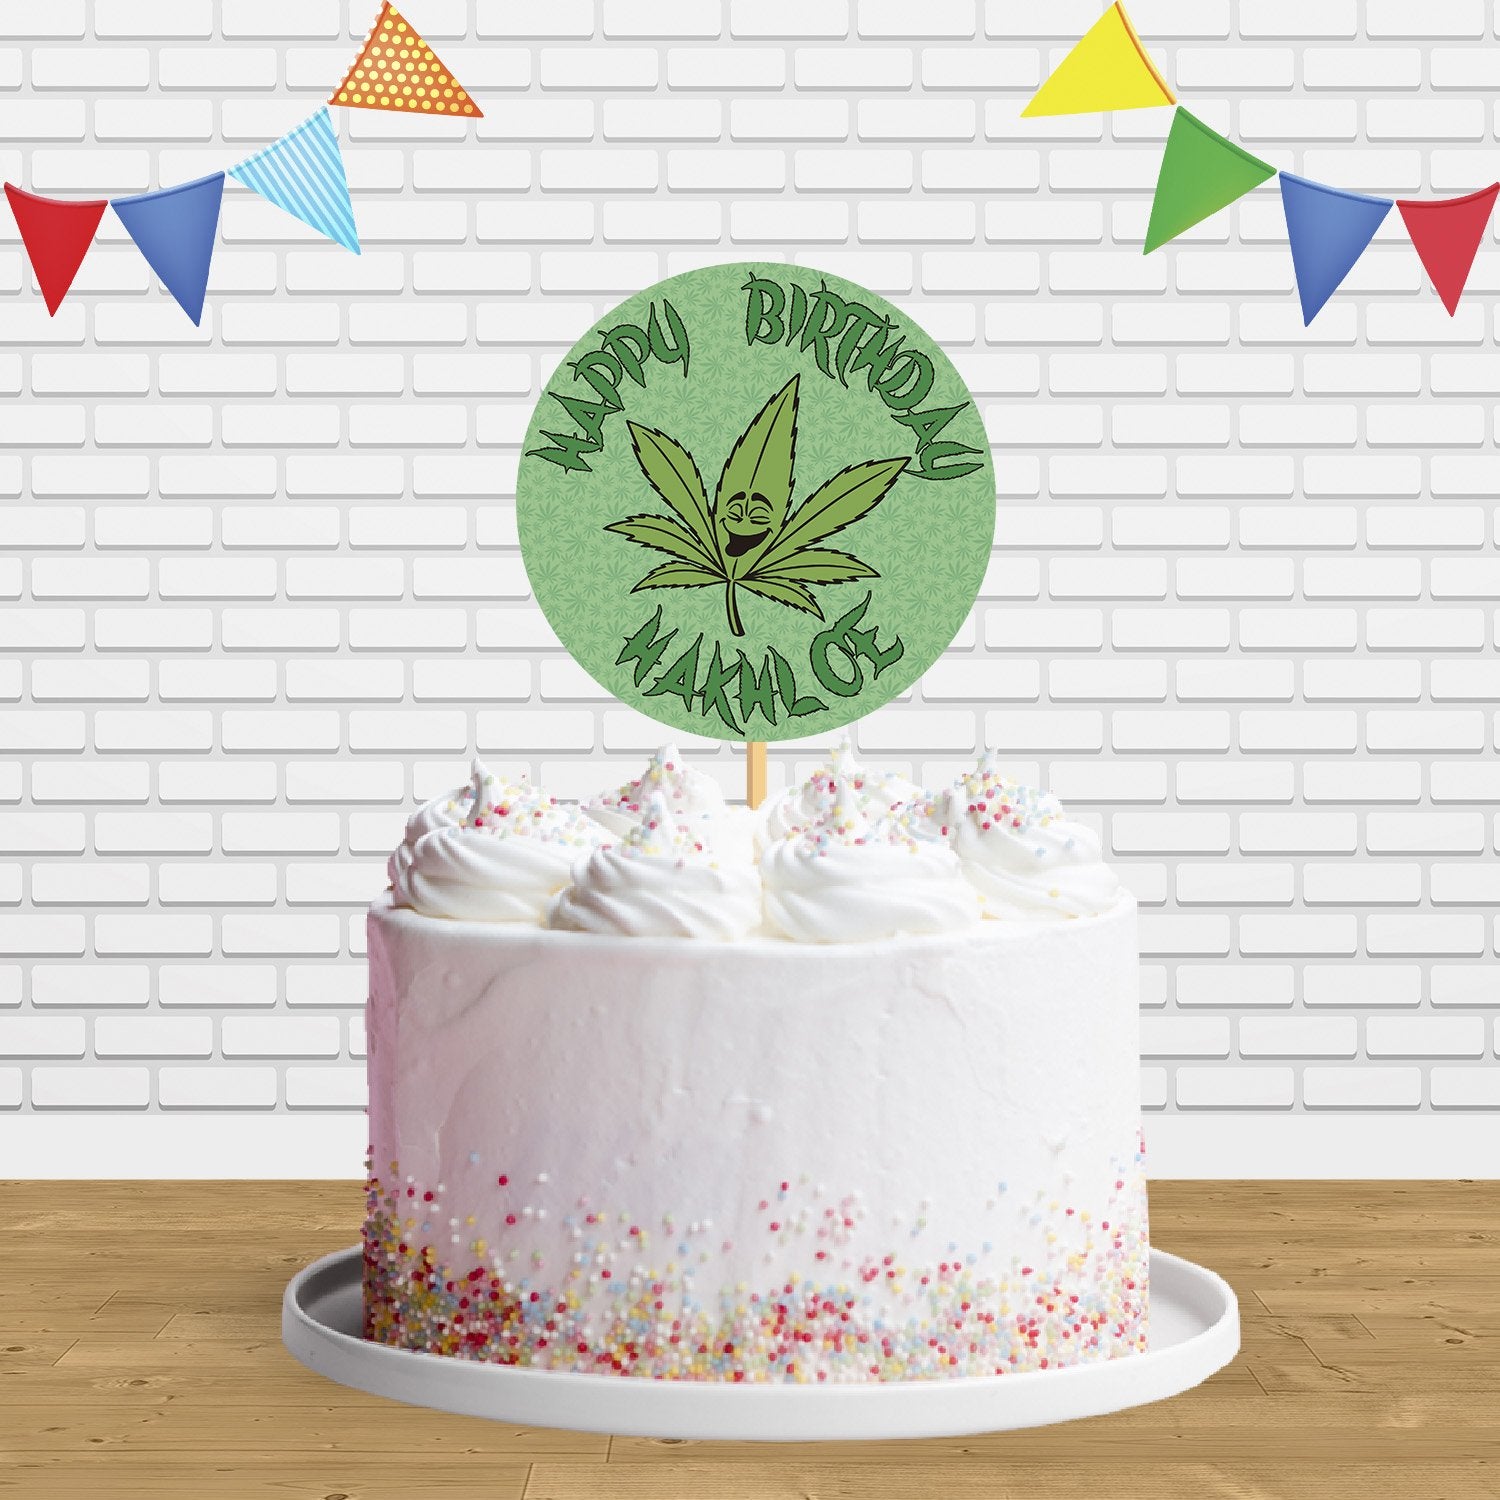 Miracle Cakes - Happy Birthday!! #cake #cakes #weed #cannabis #hemp # marijuana #30 #smoke #celebrate #_miracle_cakes_ #party #birthday #vanilla  #instagood #instagram #picoftheday #likeforlikes #followforfollowback  #twitter #facebook #snap #dessert ...